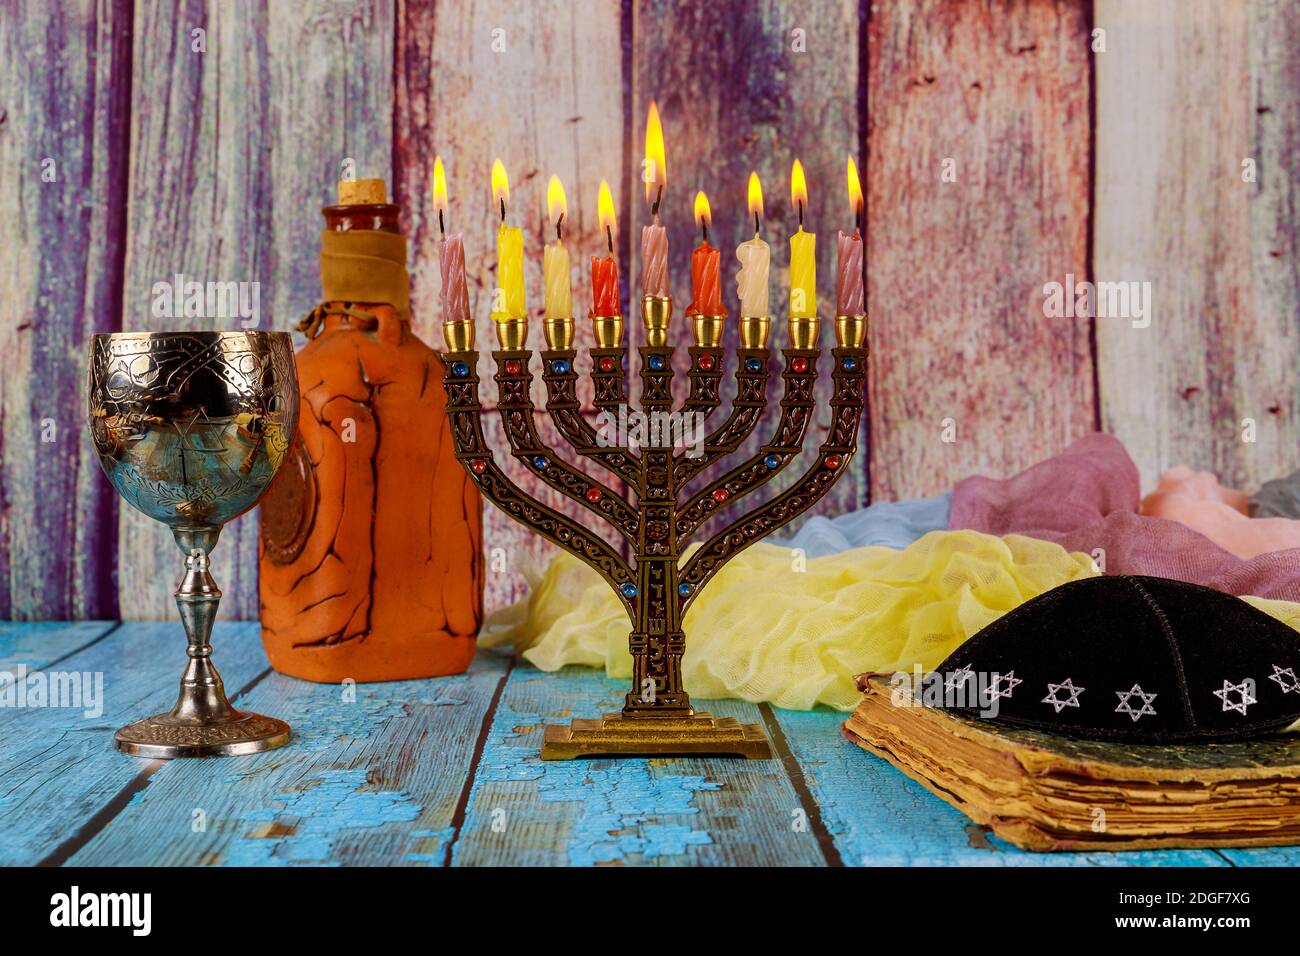 Hanukkah menorah with burning candles Stock Photo